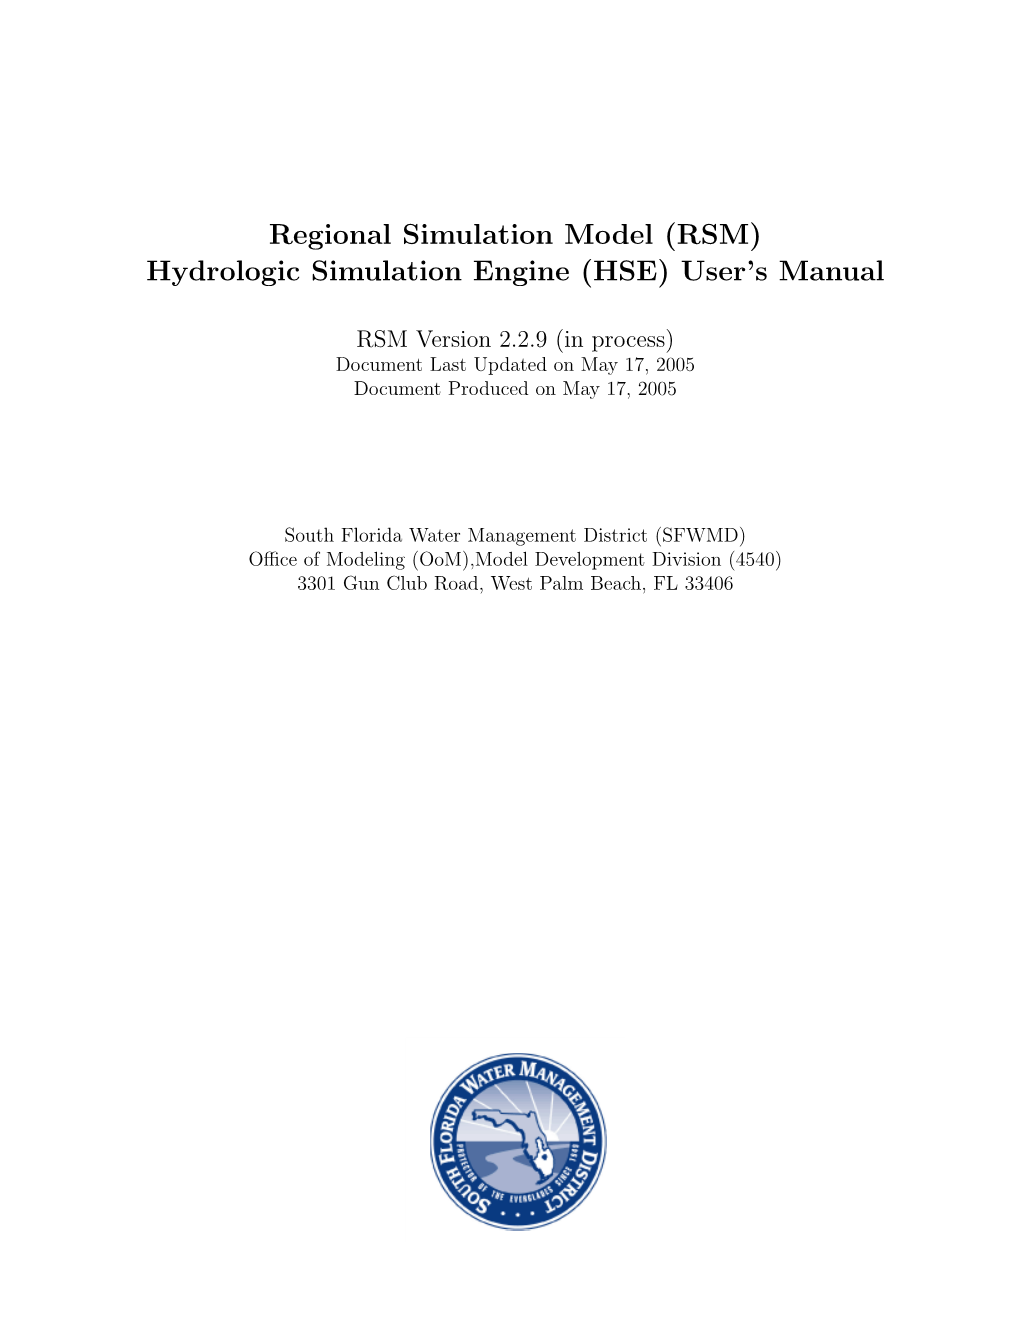 Hydrologic Simulation Engine (HSE) User's Manual